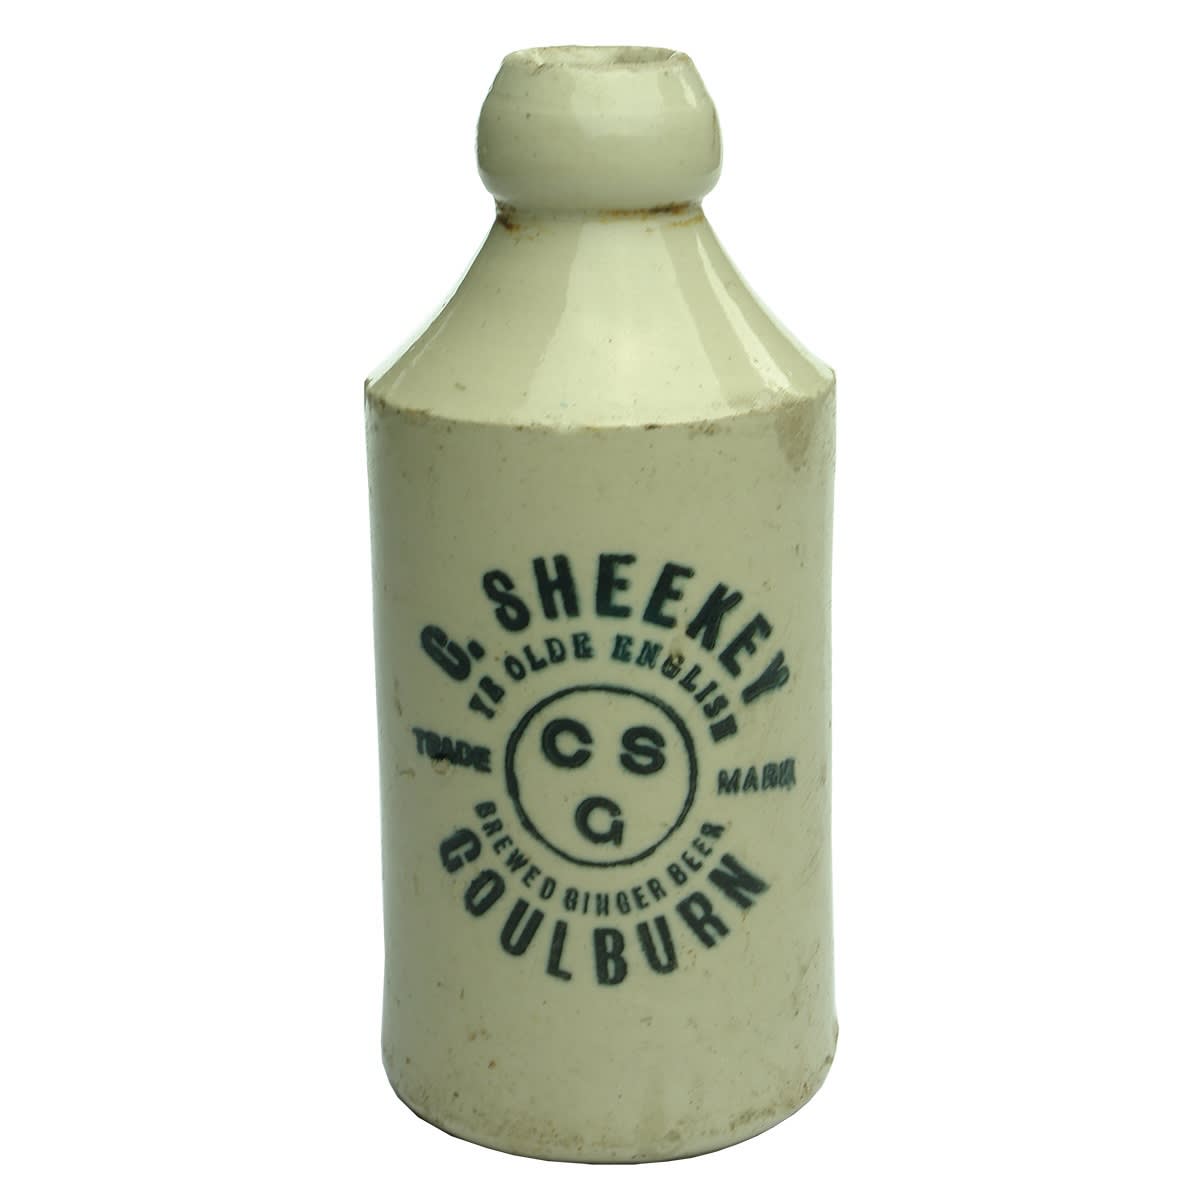 Ginger Beer. C. Sheekey, Goulburn. Dump Blob Top. R. Fowler 1913. (New South Wales)